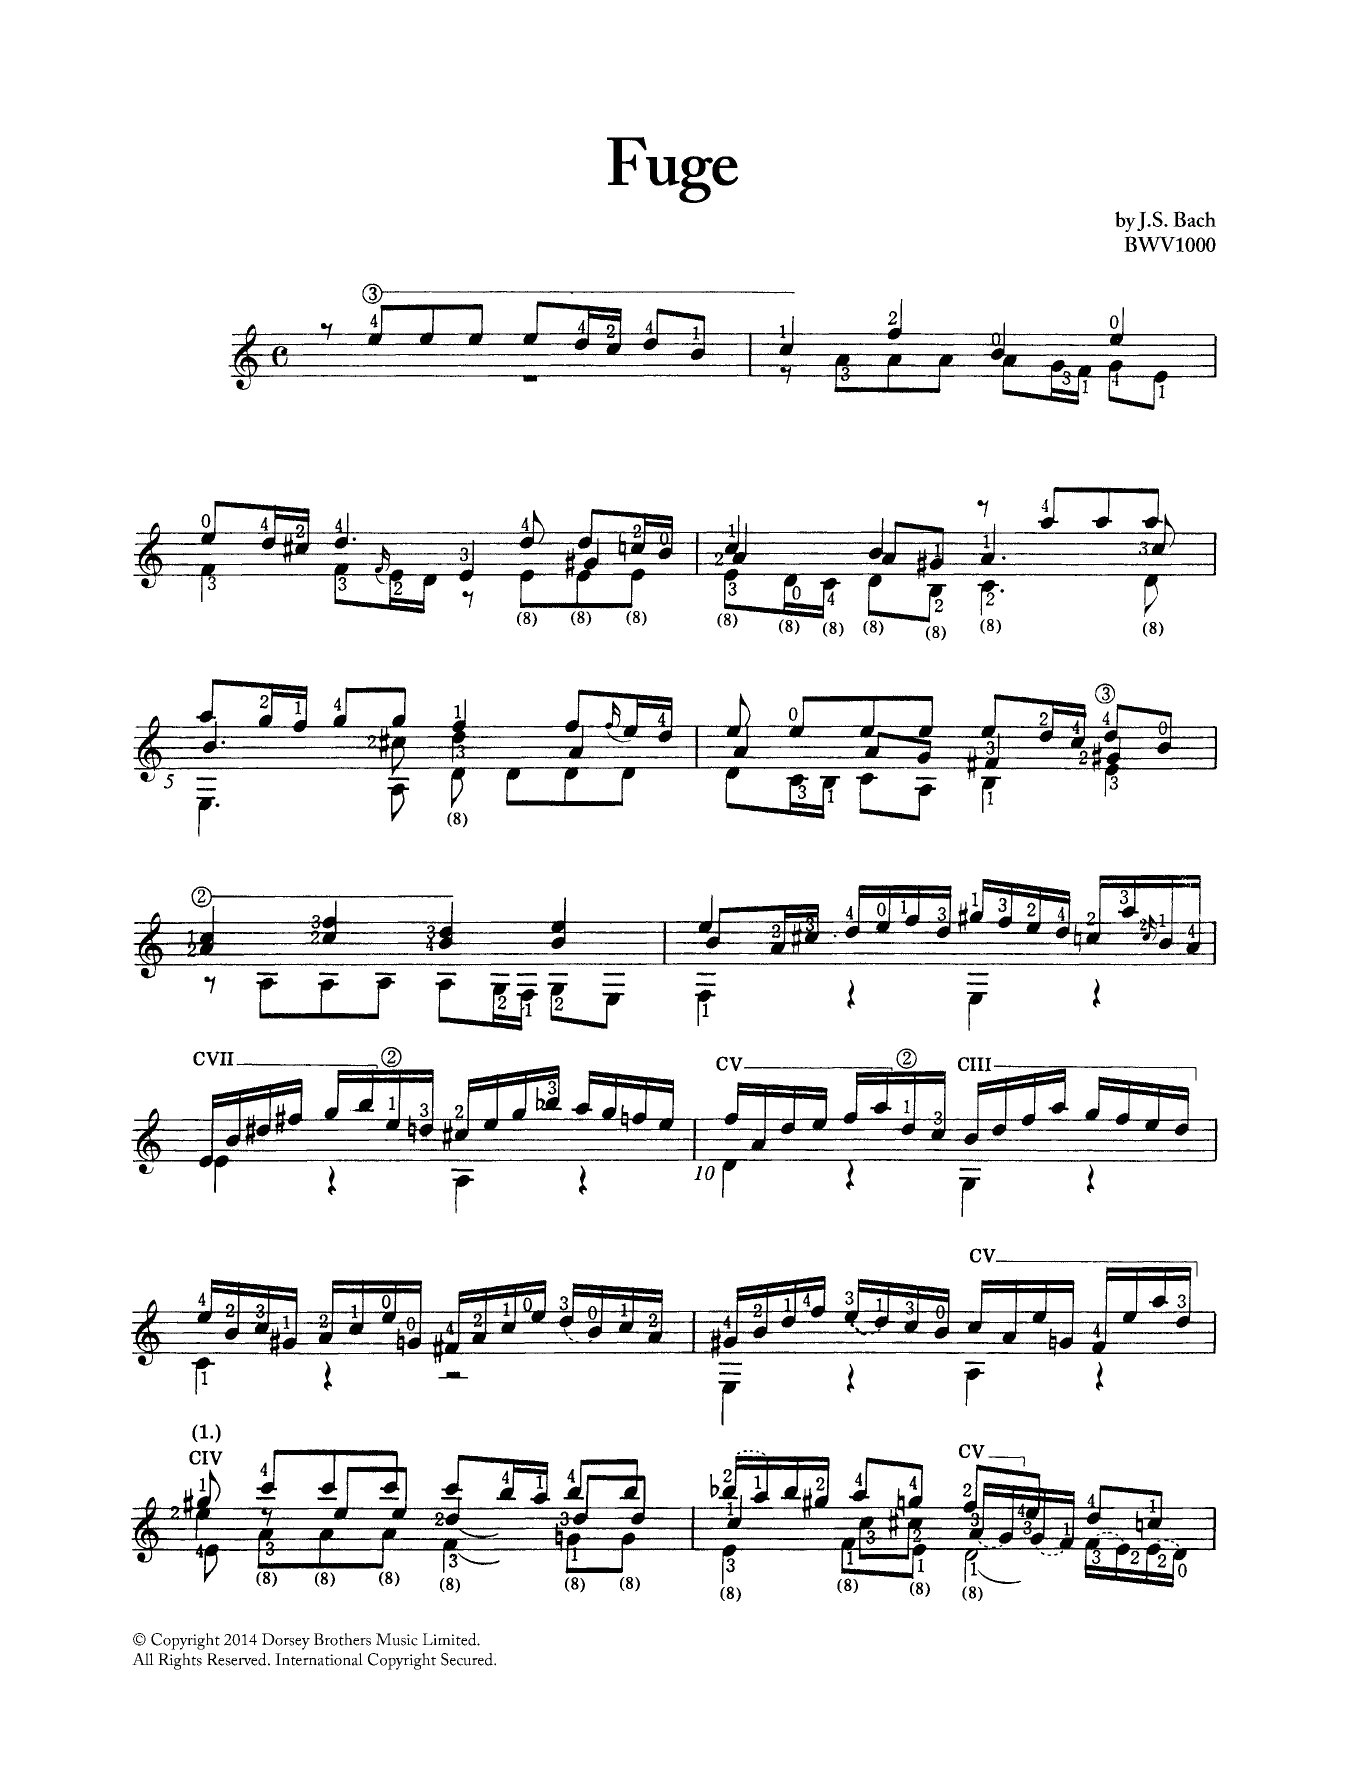 Johann Sebastian Bach Fugue In A Minor BWV 1000 Sheet Music Notes & Chords for Guitar - Download or Print PDF